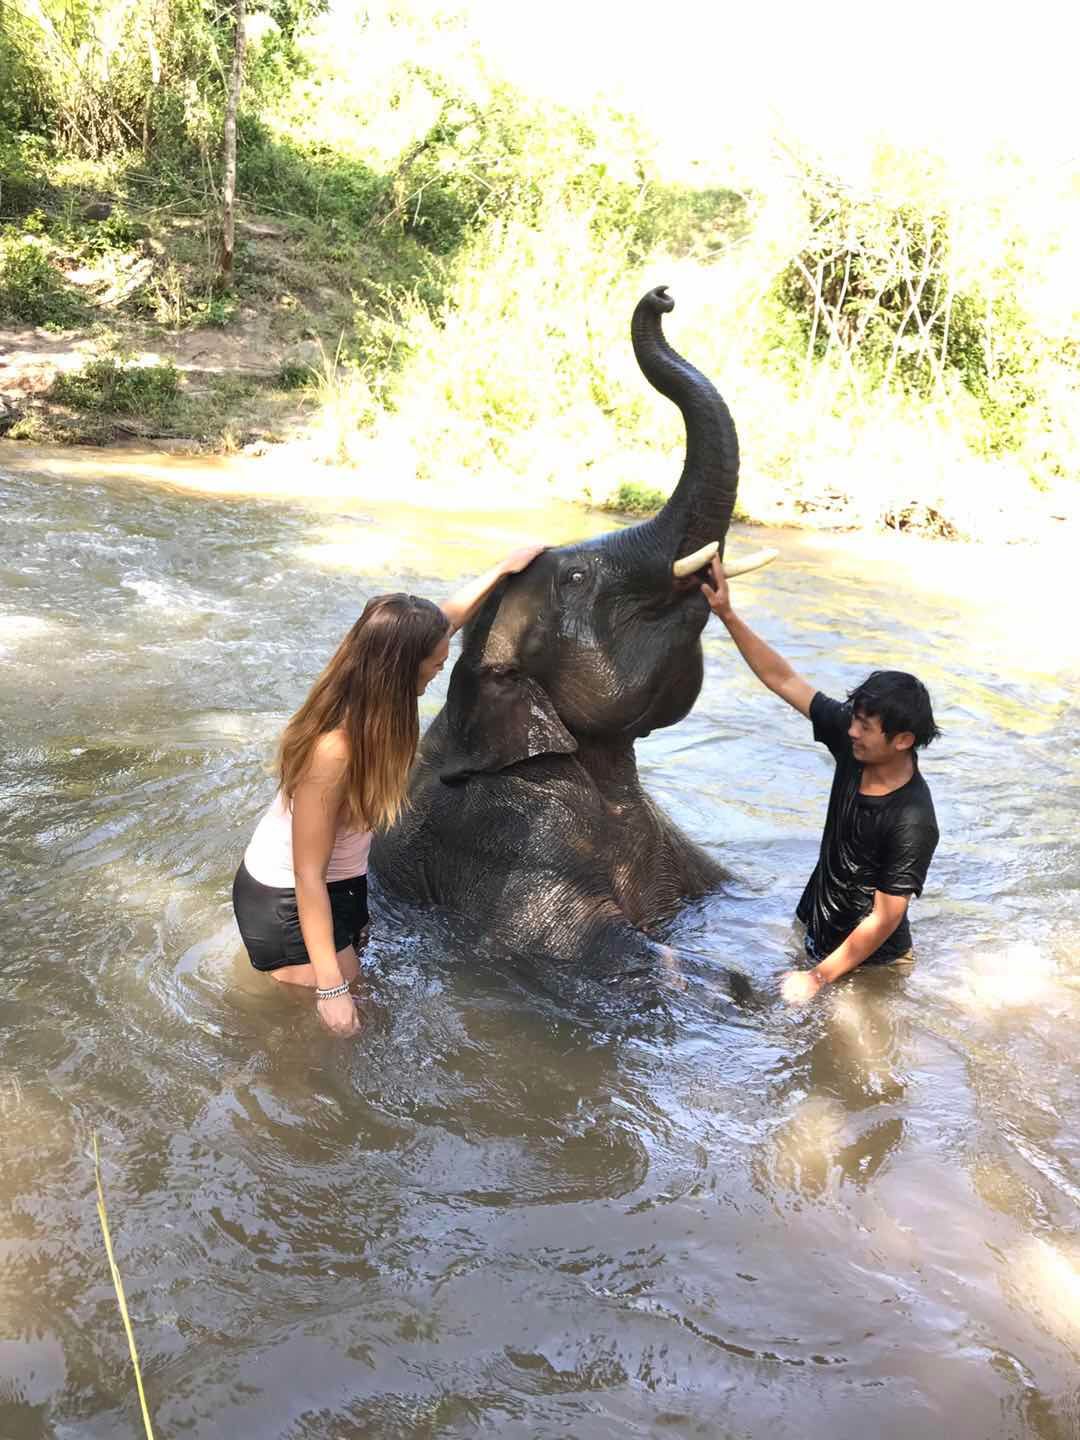 Chiang Mai Tour: Ethical Elephant Sanctuary 